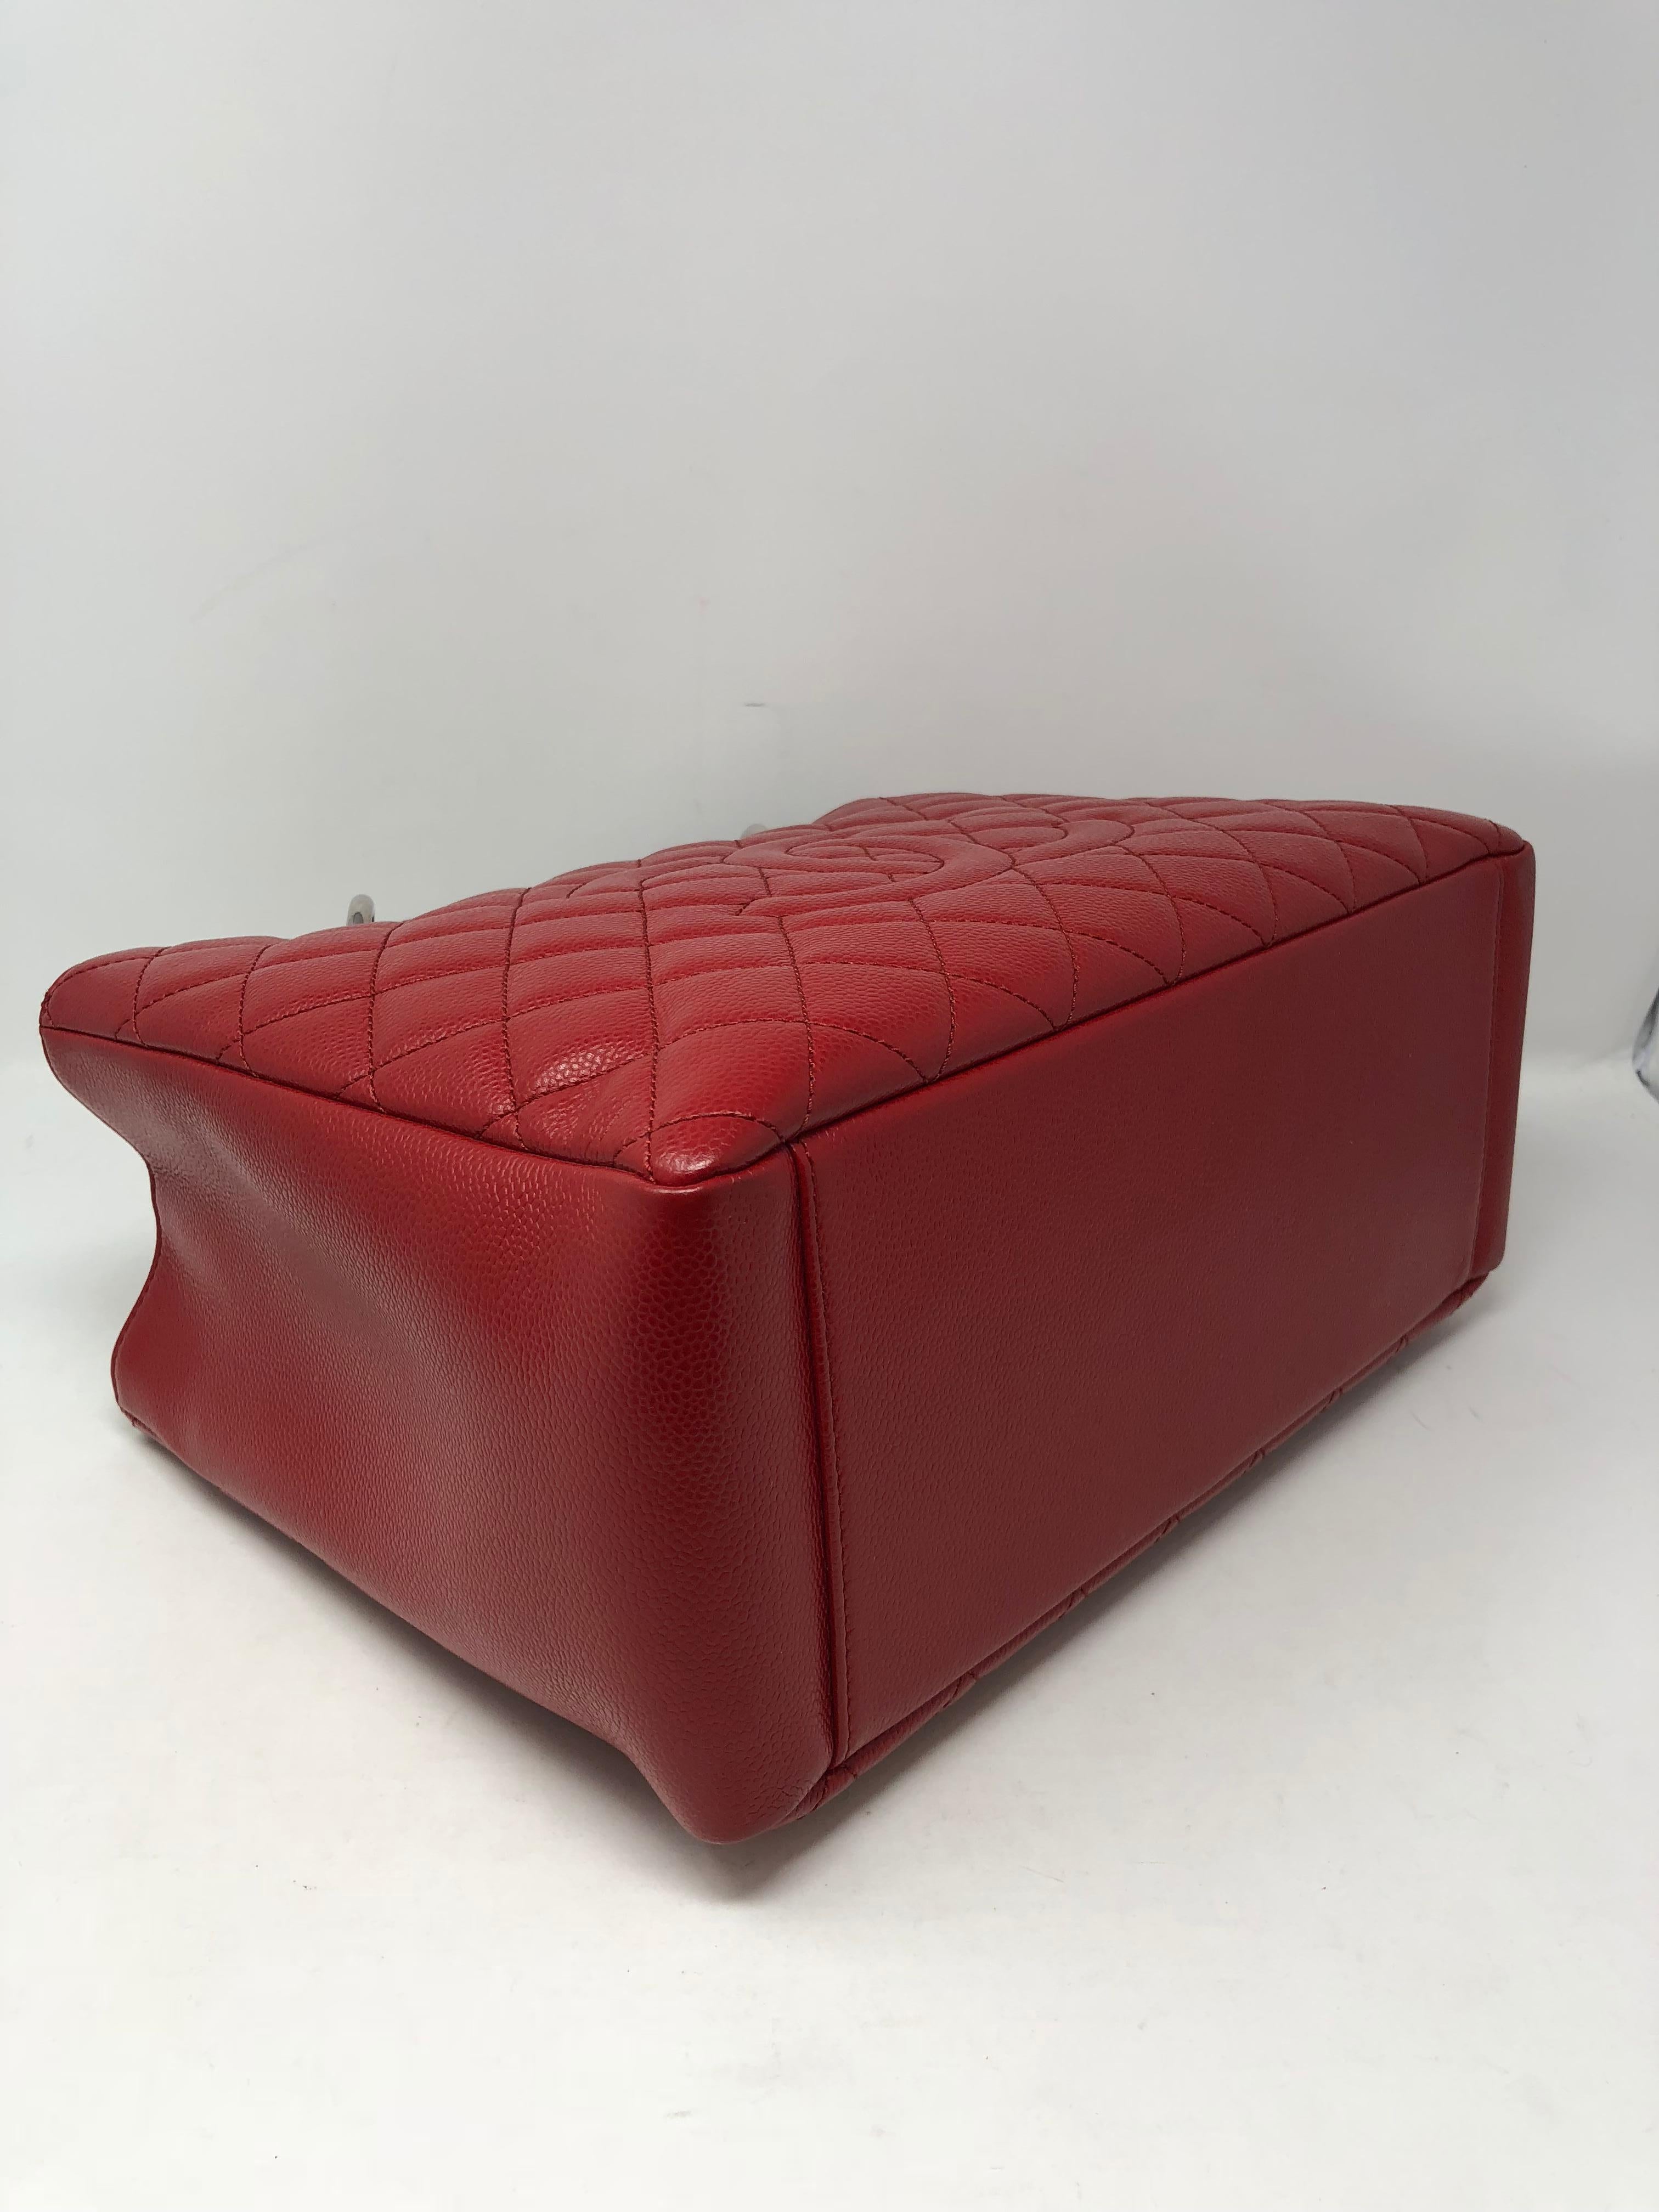 Chanel Red Grand Shopper Tote Bag 2